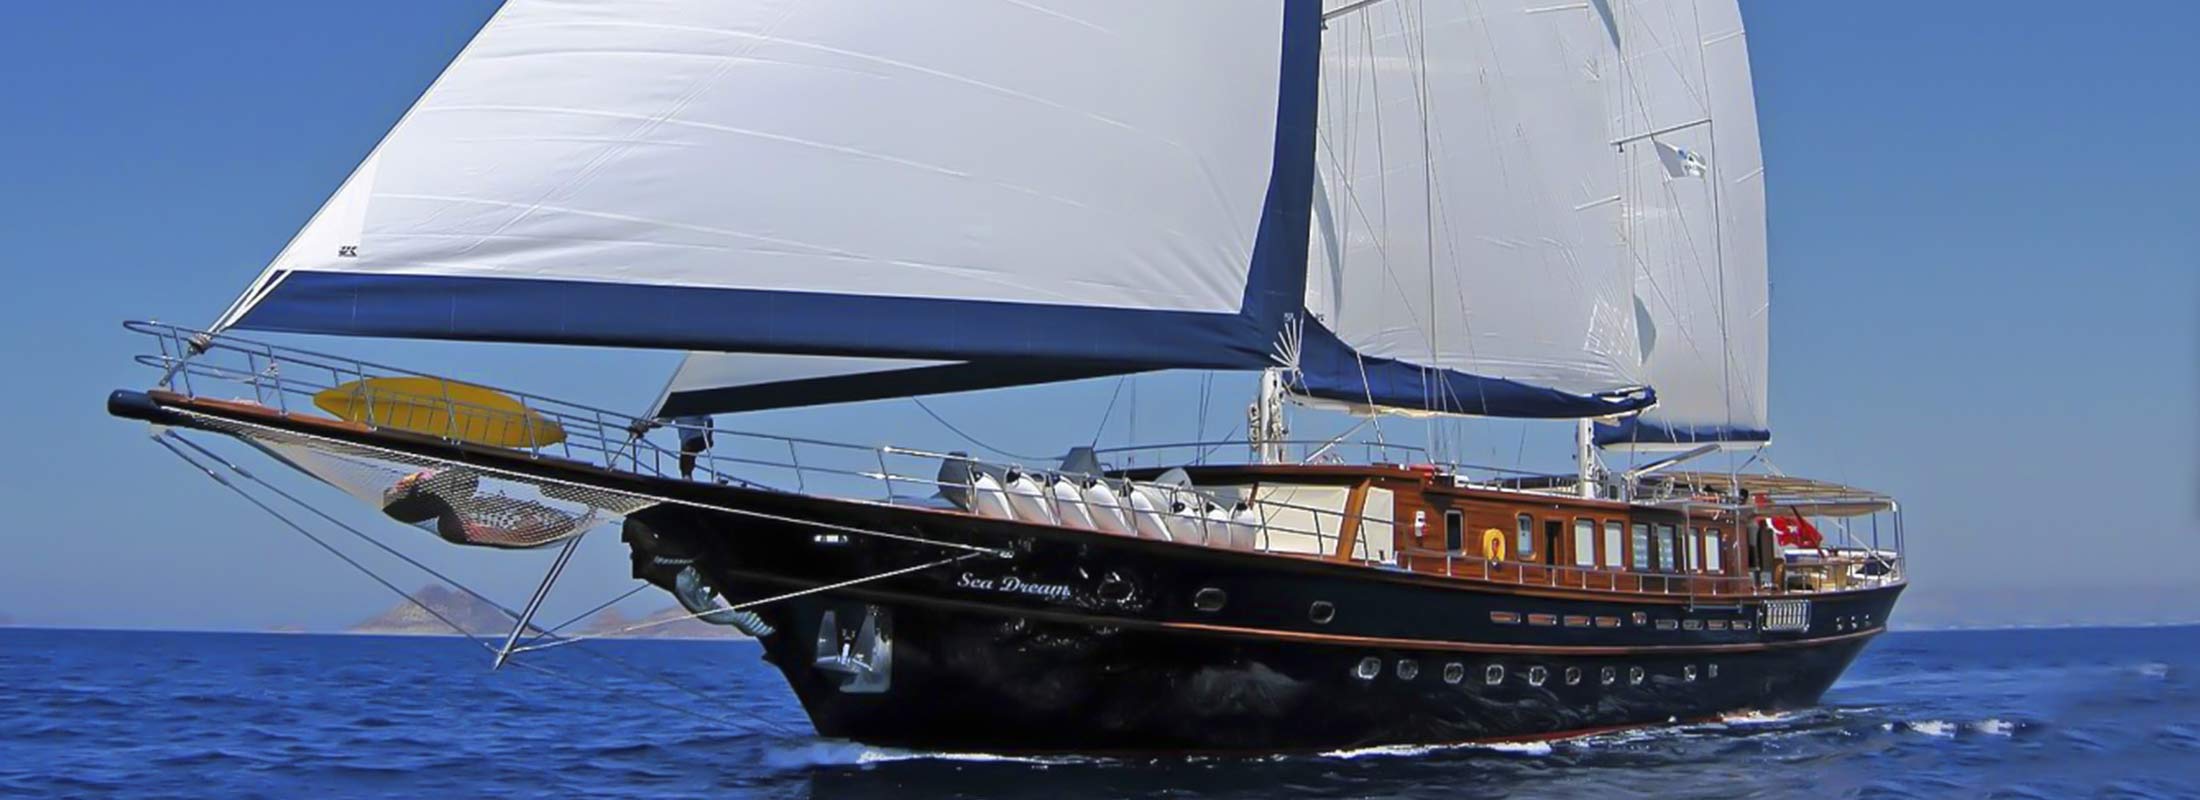 Sea Dream Sailing Yacht for Charter Mediterranean slider 1 